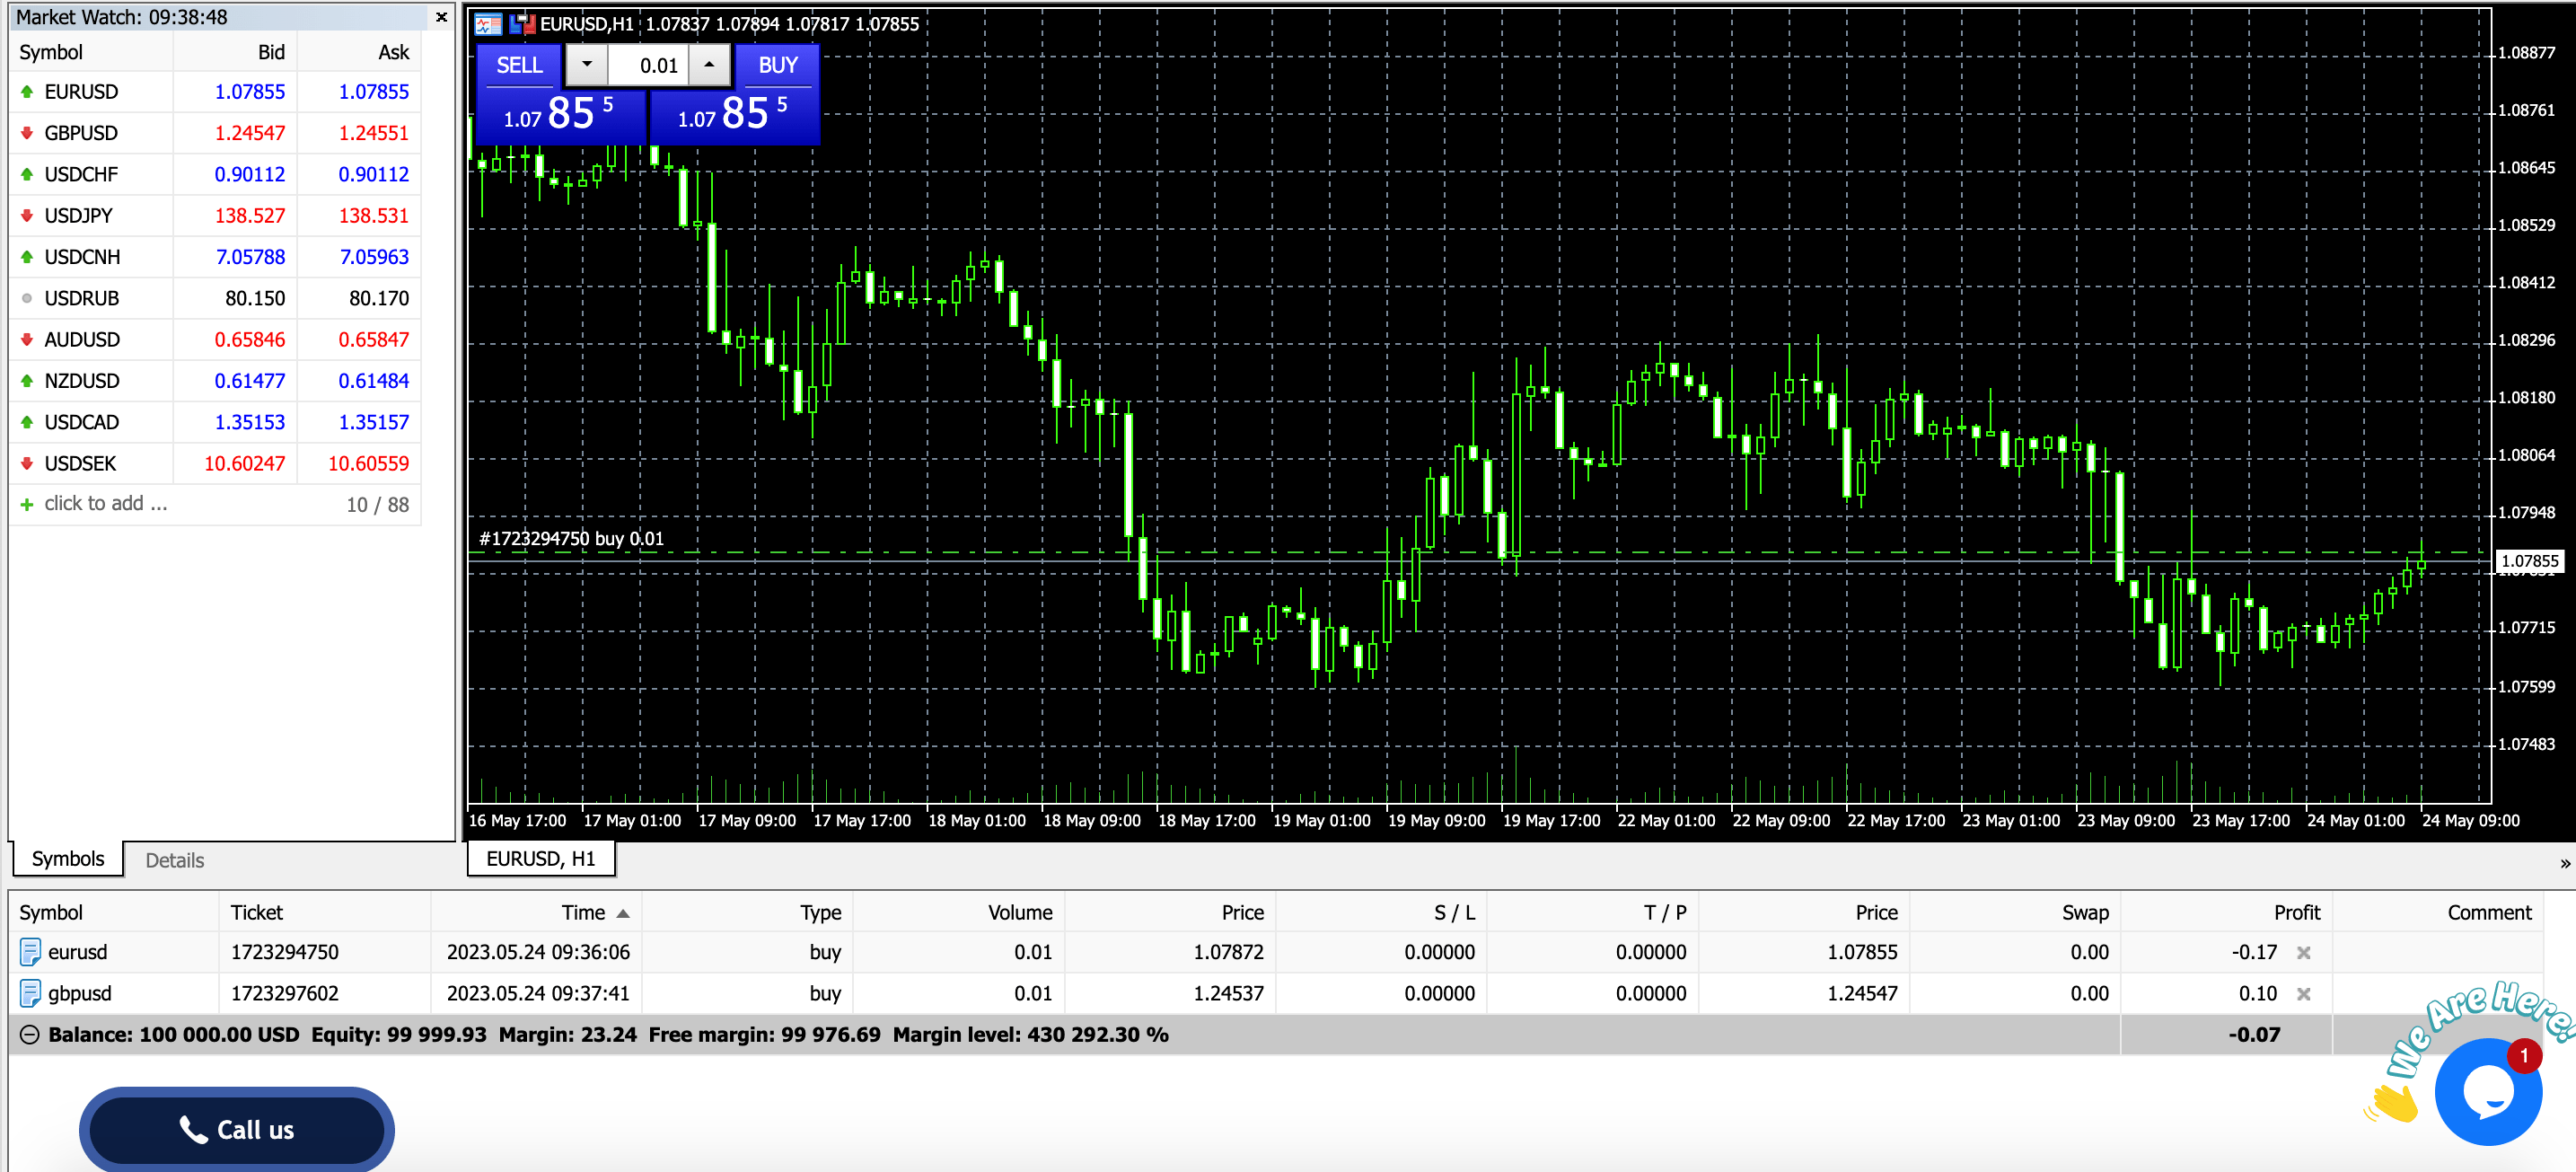 Unicorn Forex Metatrader 5 trading chart view